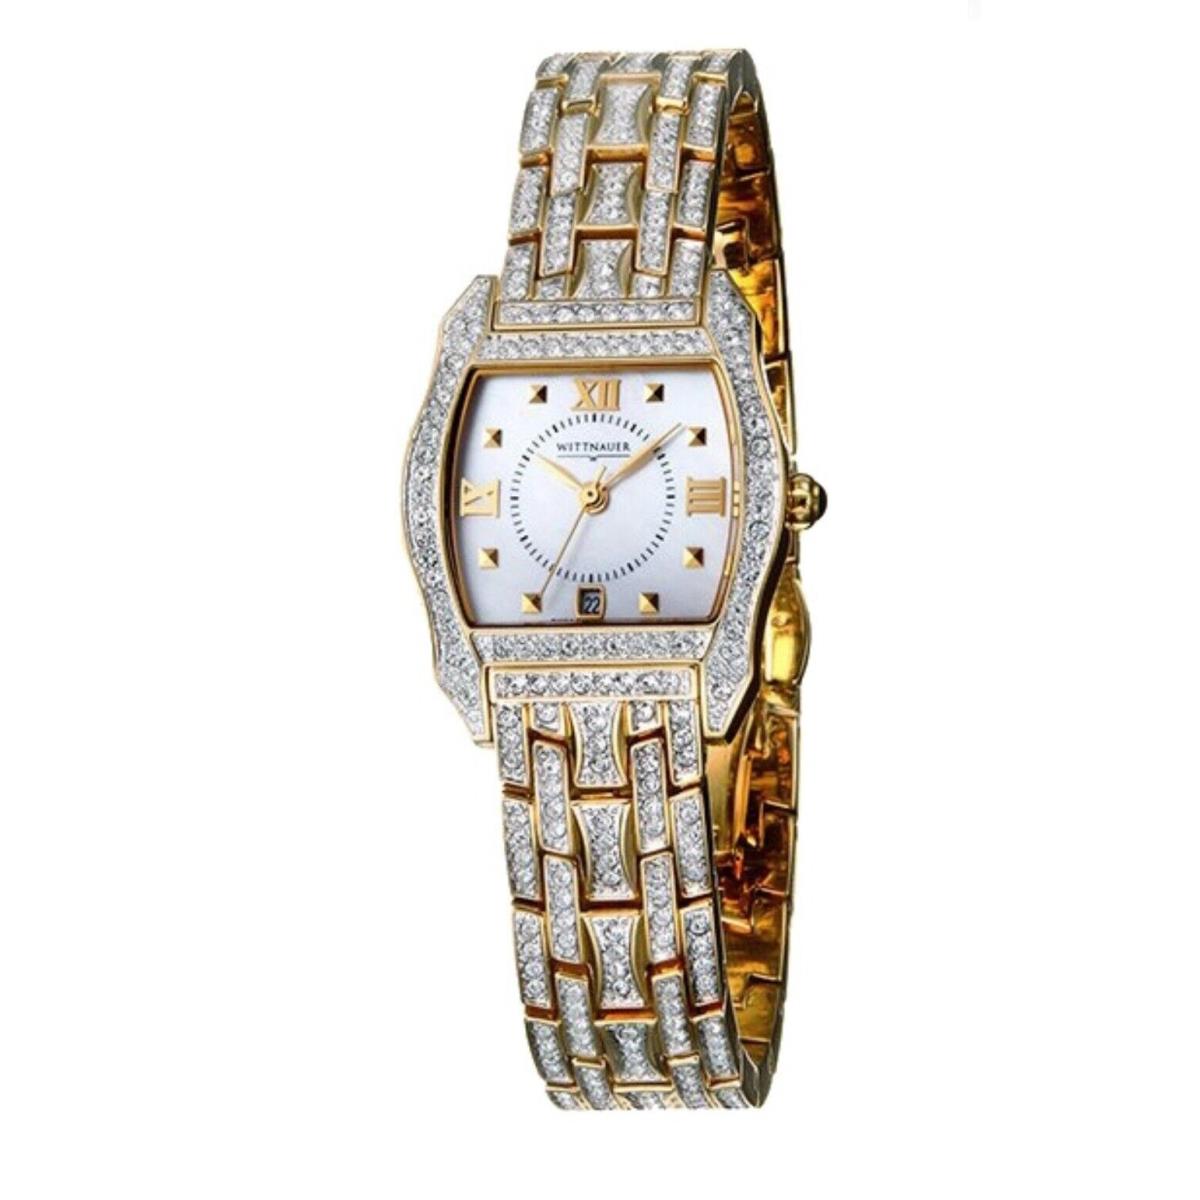 Wittnauer Krystal Series Ladies Mop Gold Tone Swiss Quartz Watch 12M10